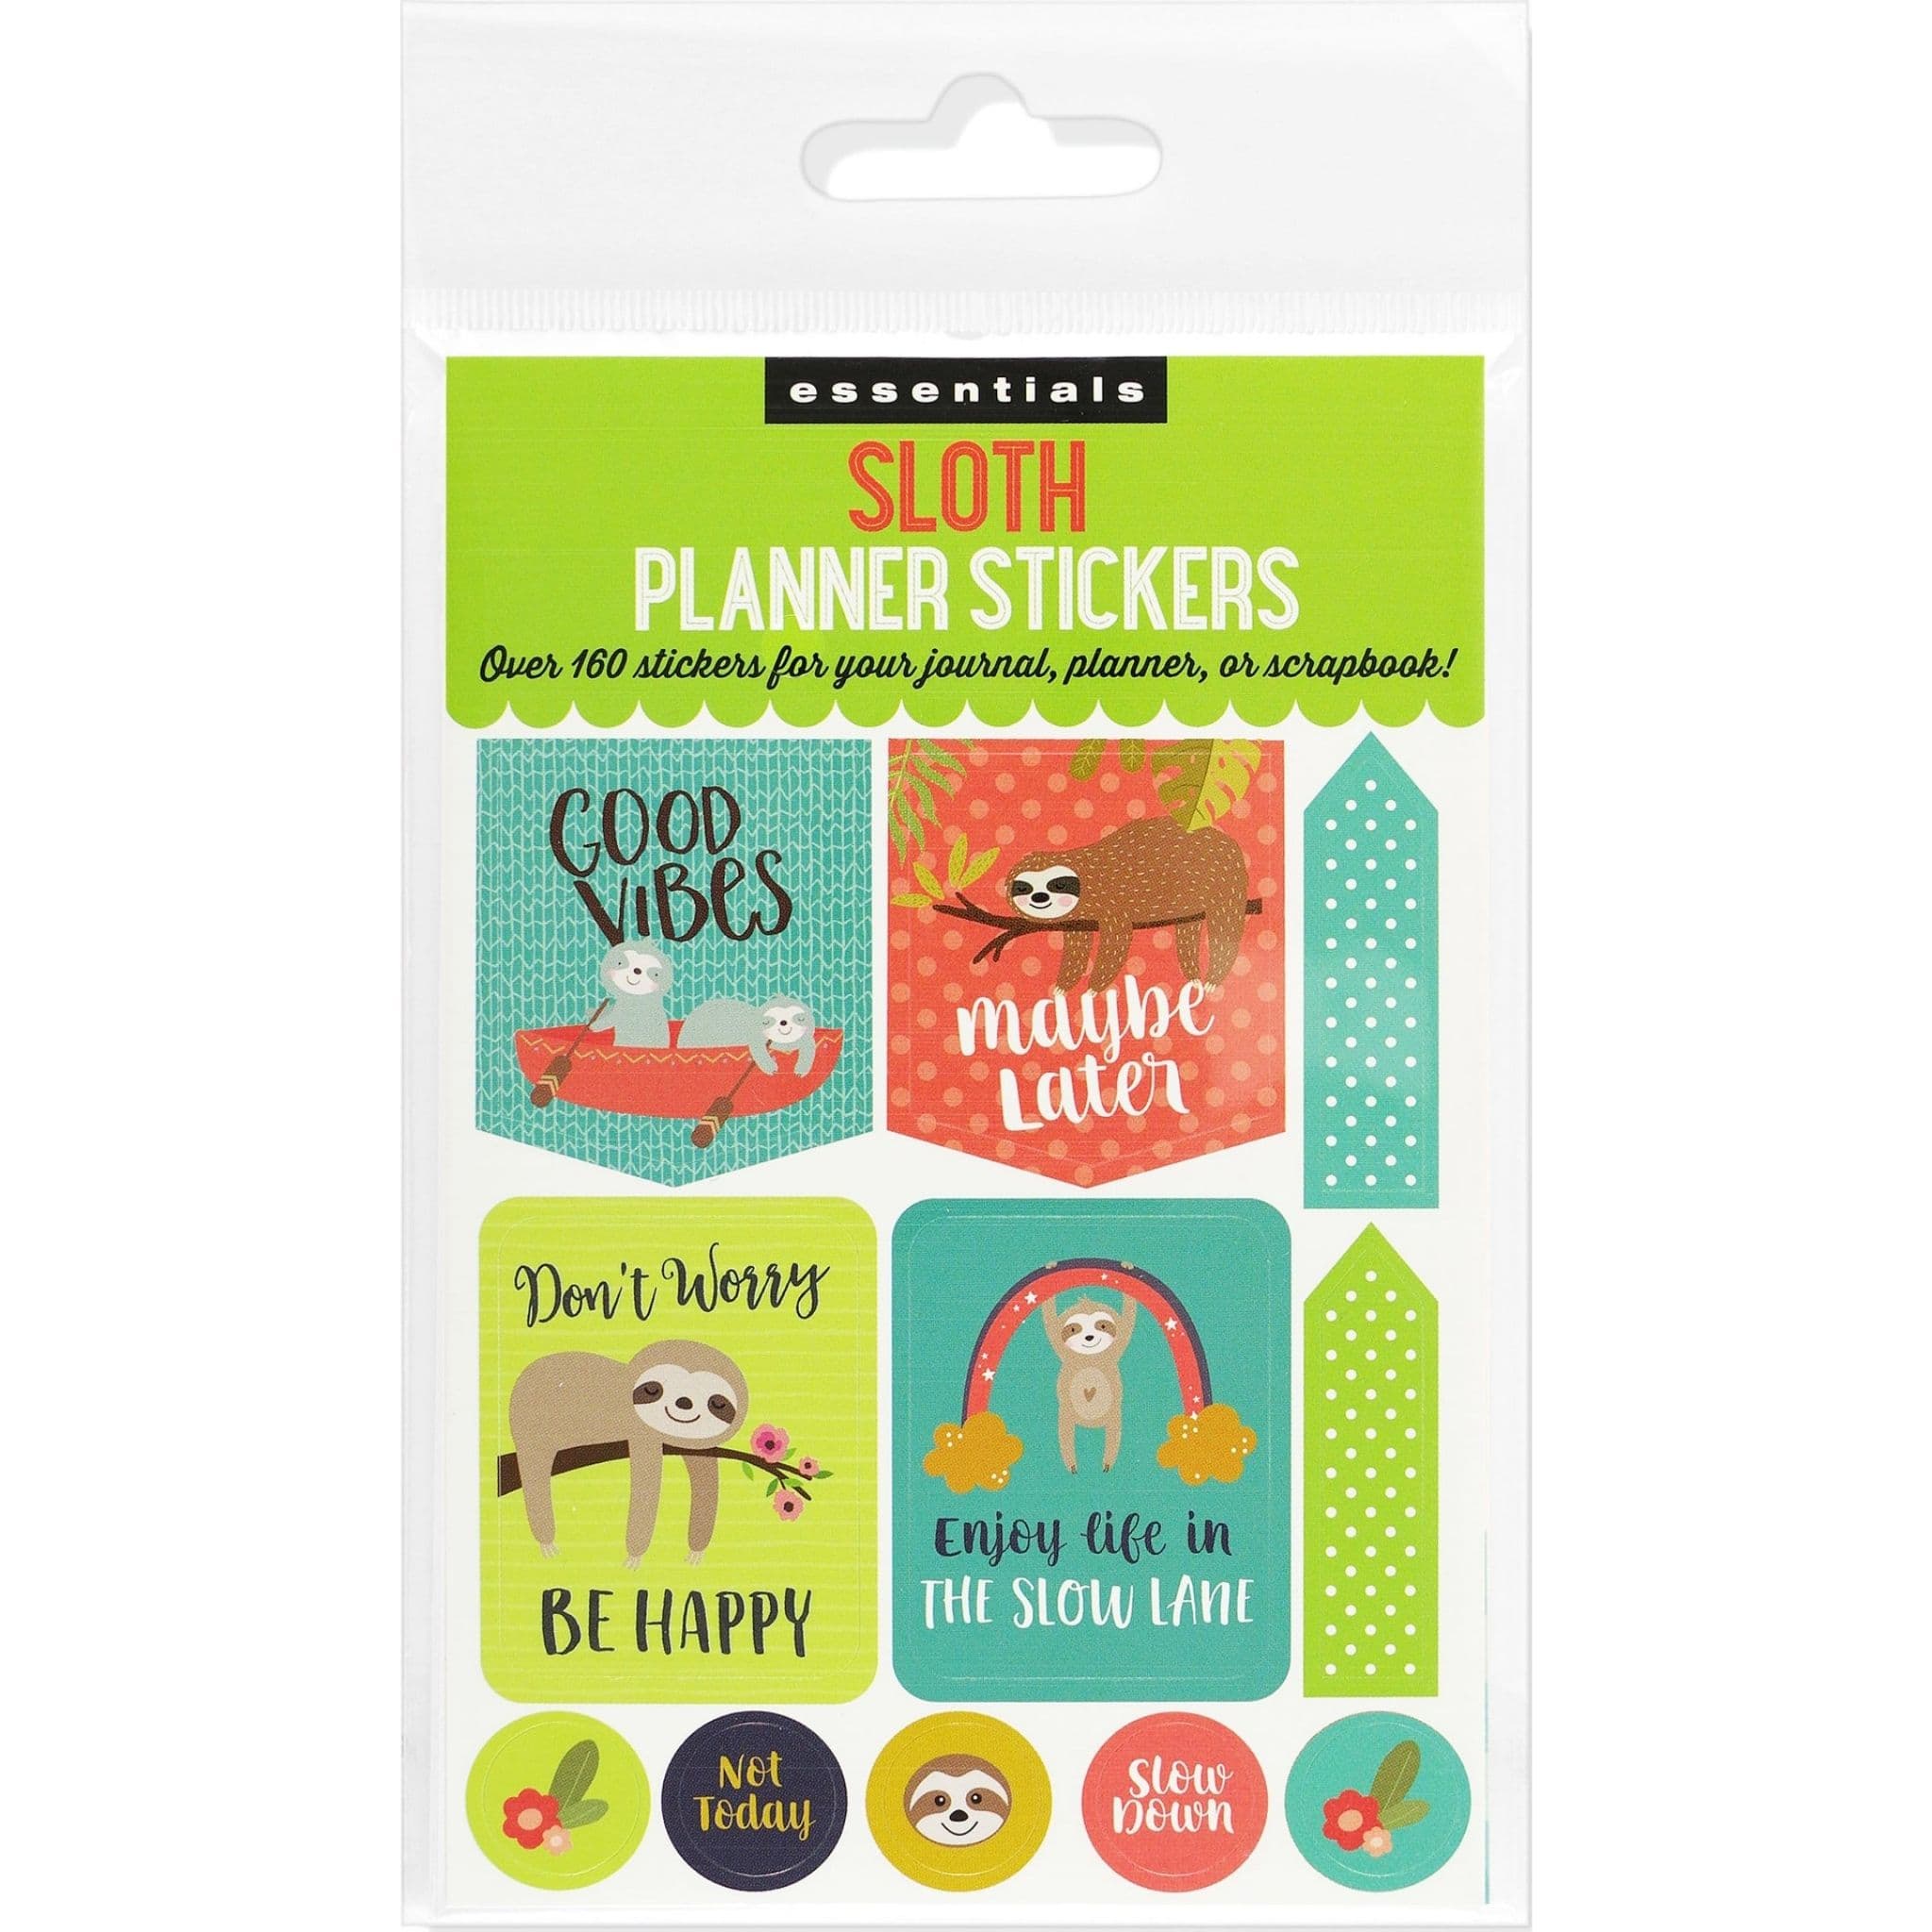 essentials sloth planner stickers 160 stickers for journal - Paper Kooka